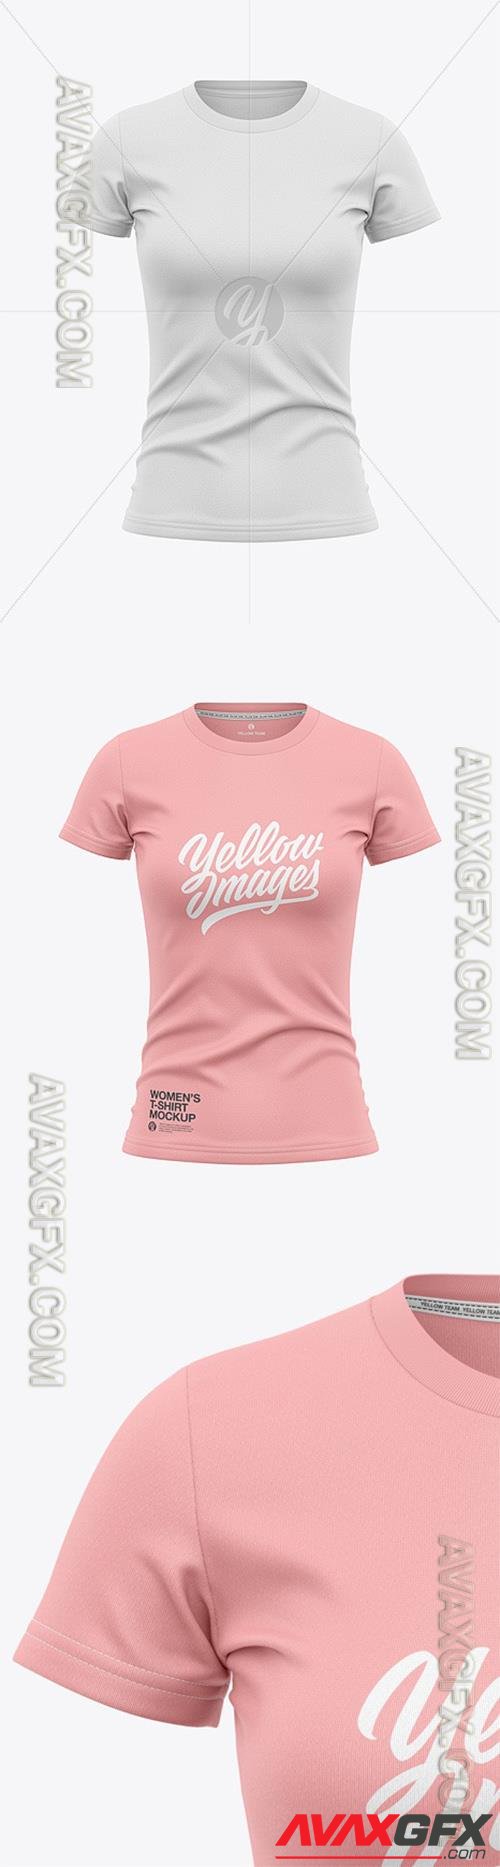 Women's T-Shirt Mockup 96171